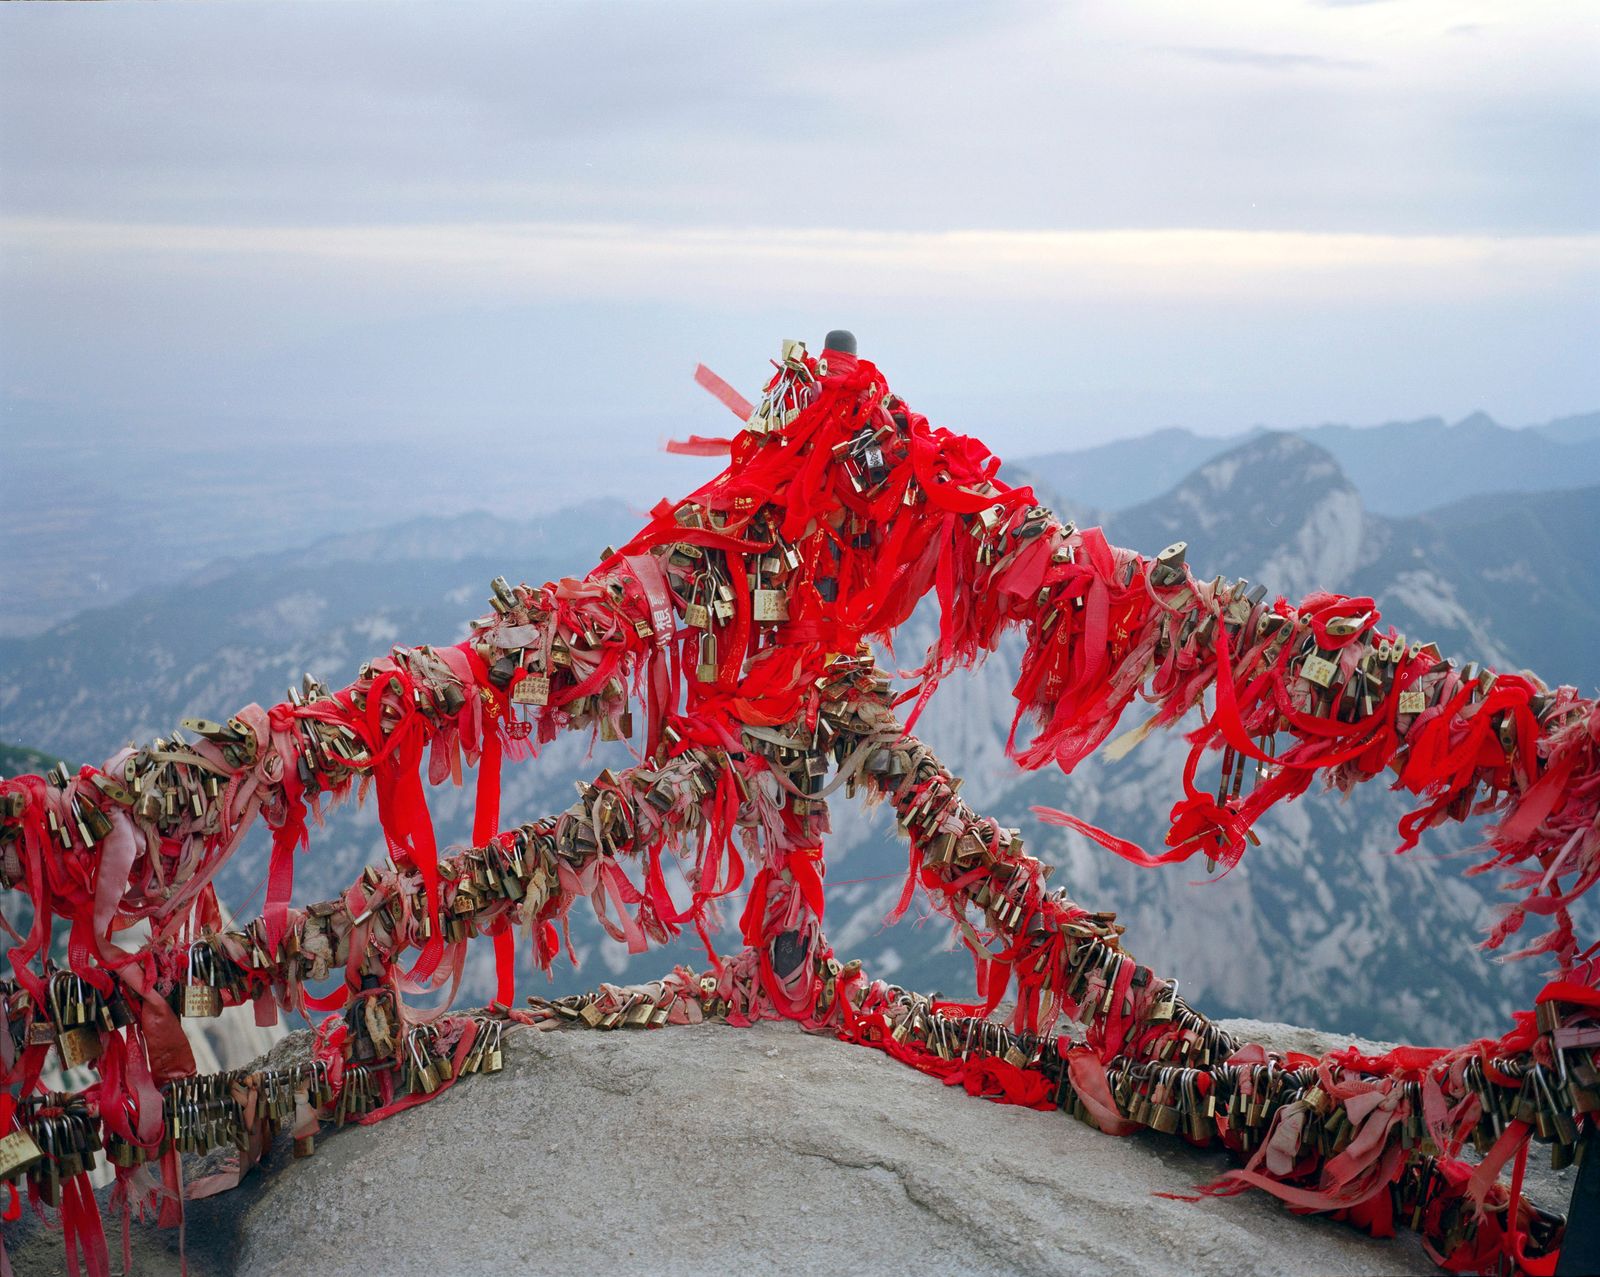 © Pan Wang - East peak of Huashan Mountain， City, Shaanxi Province, China